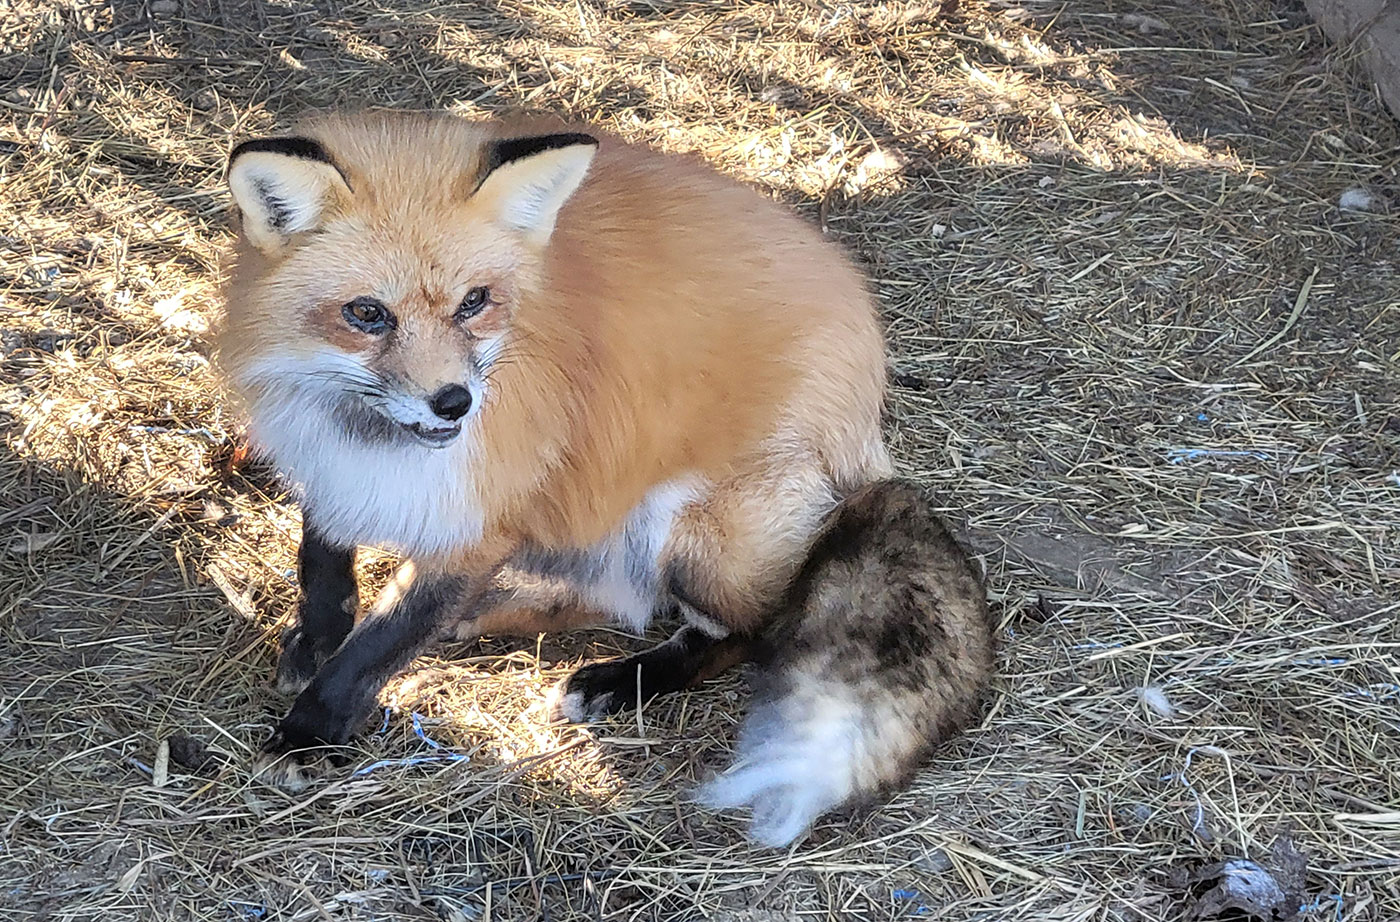 Suzy the fox